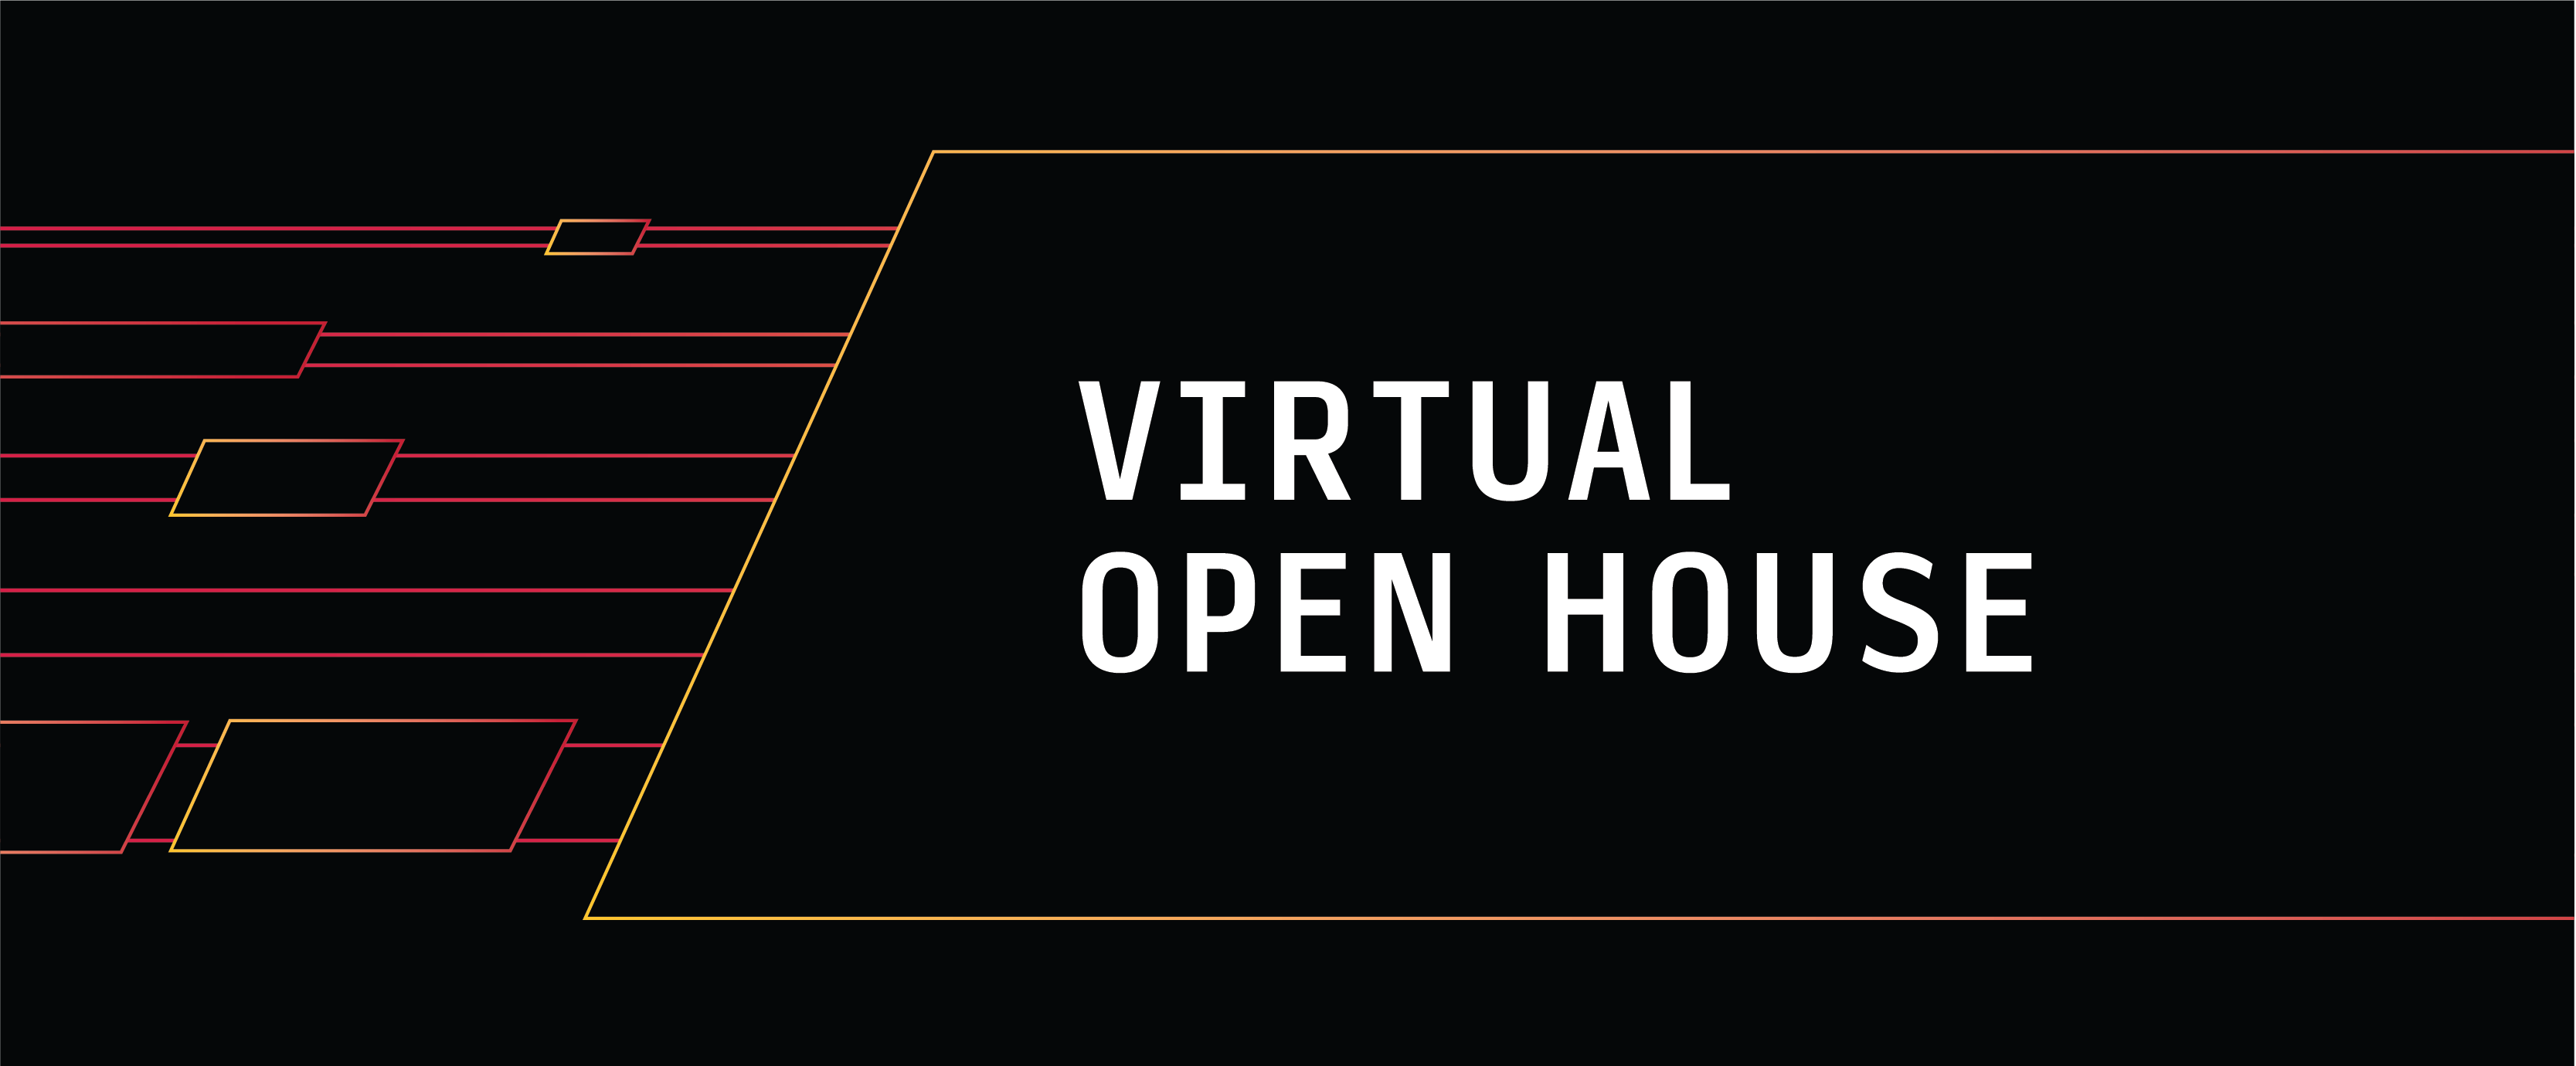 Ferris State University Virtual Open House